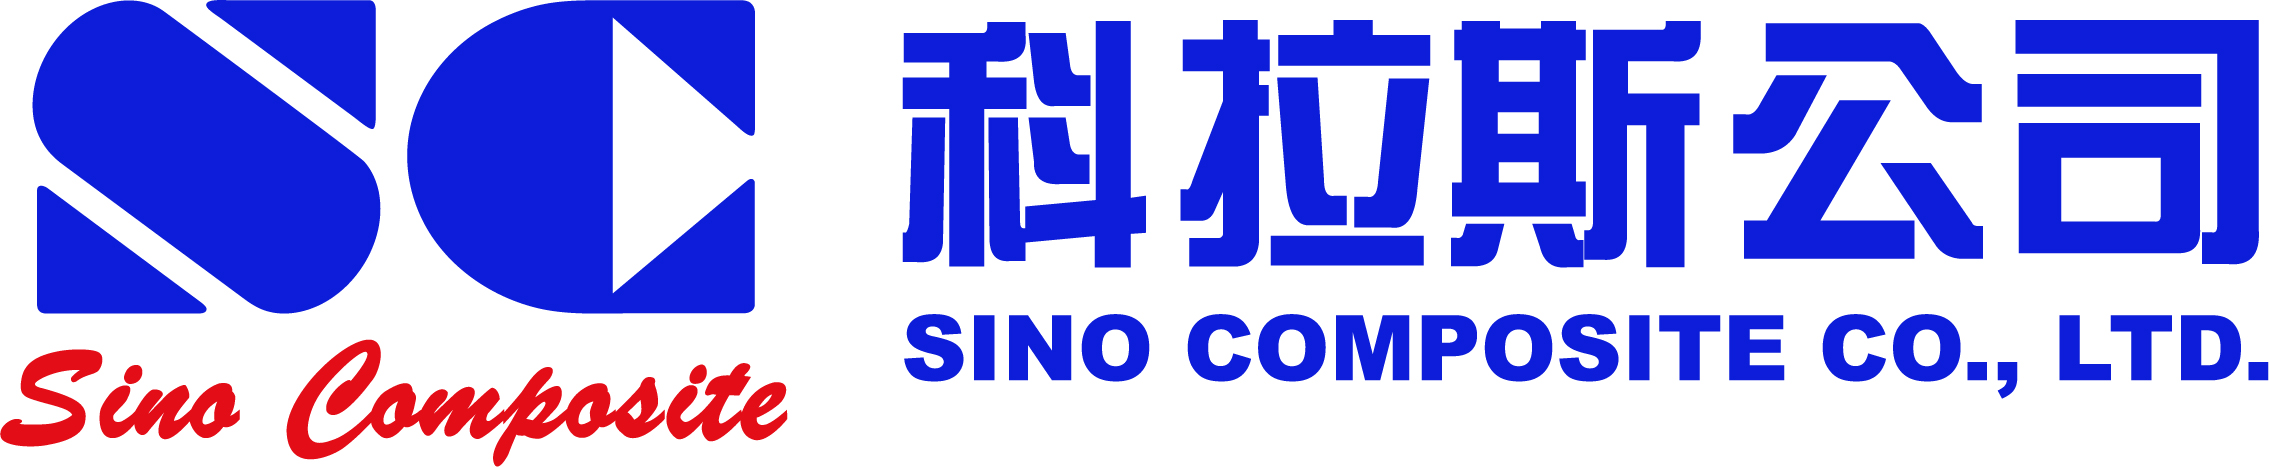 Sino Composite Co., Ltd._logo